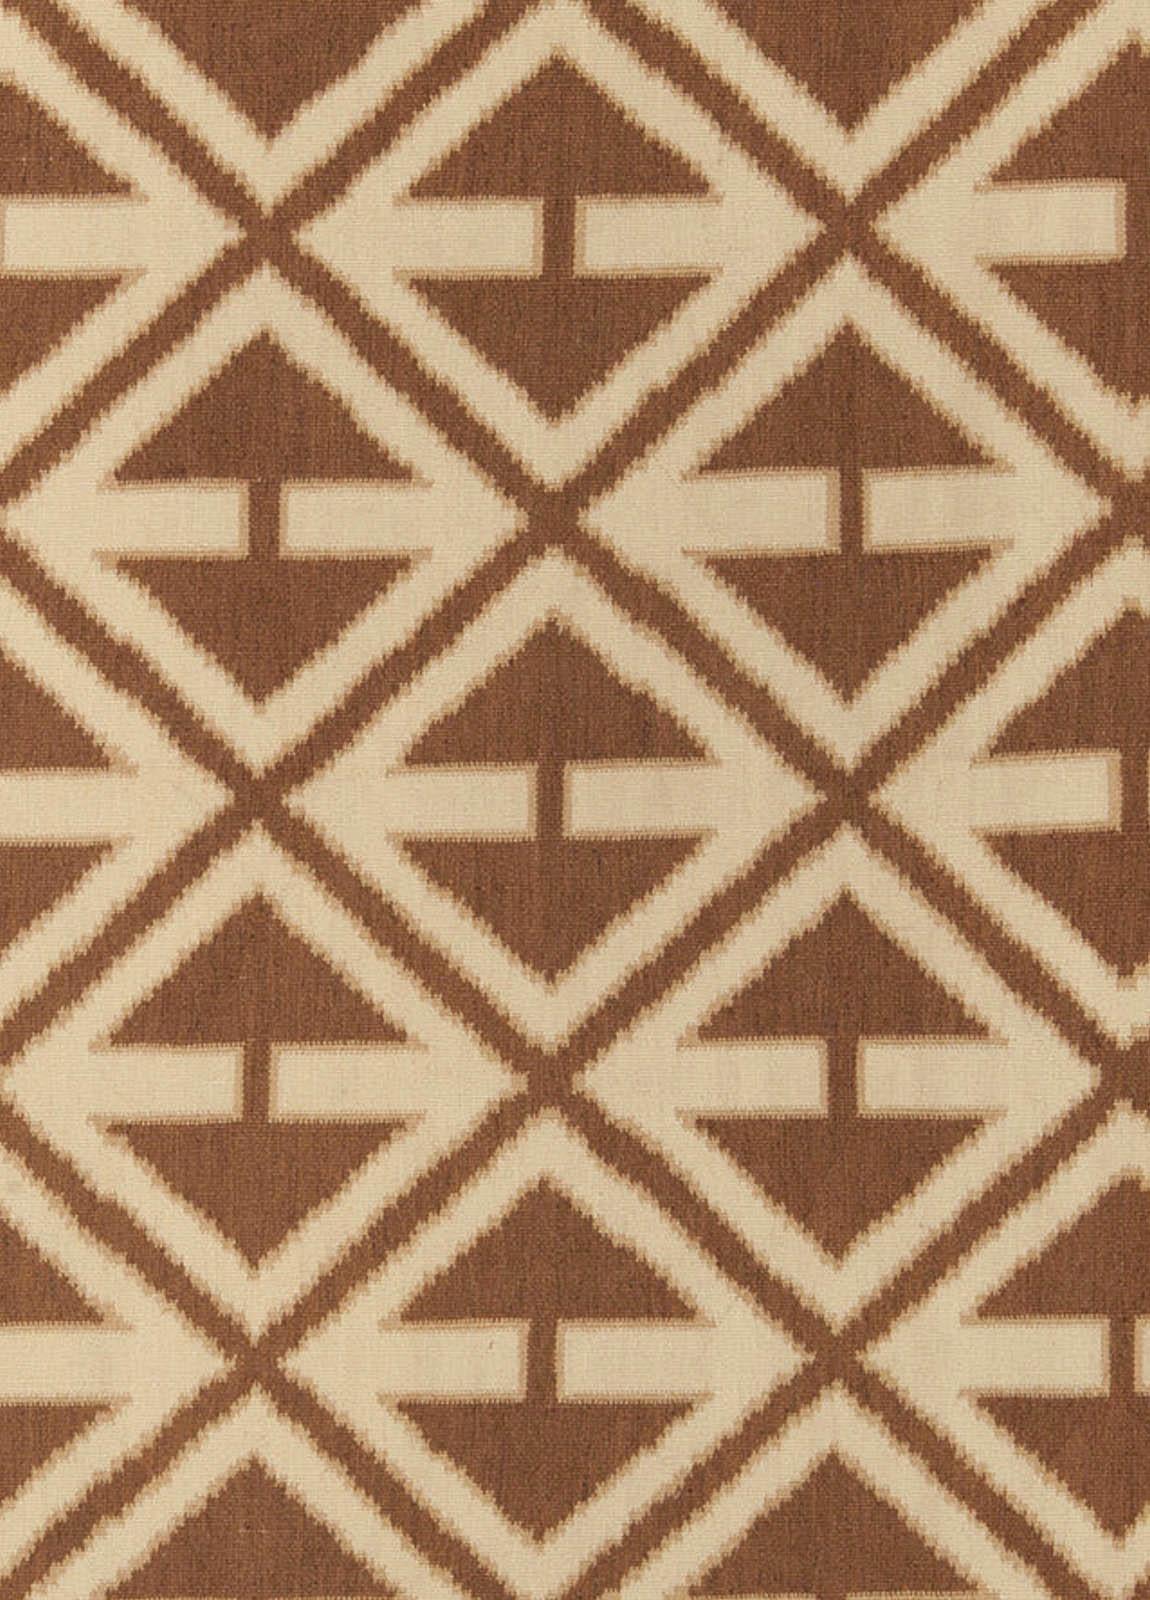 Contemporary Melograno Aubusson design handmade wool rug by Doris Leslie Blau.
Size: 8'0